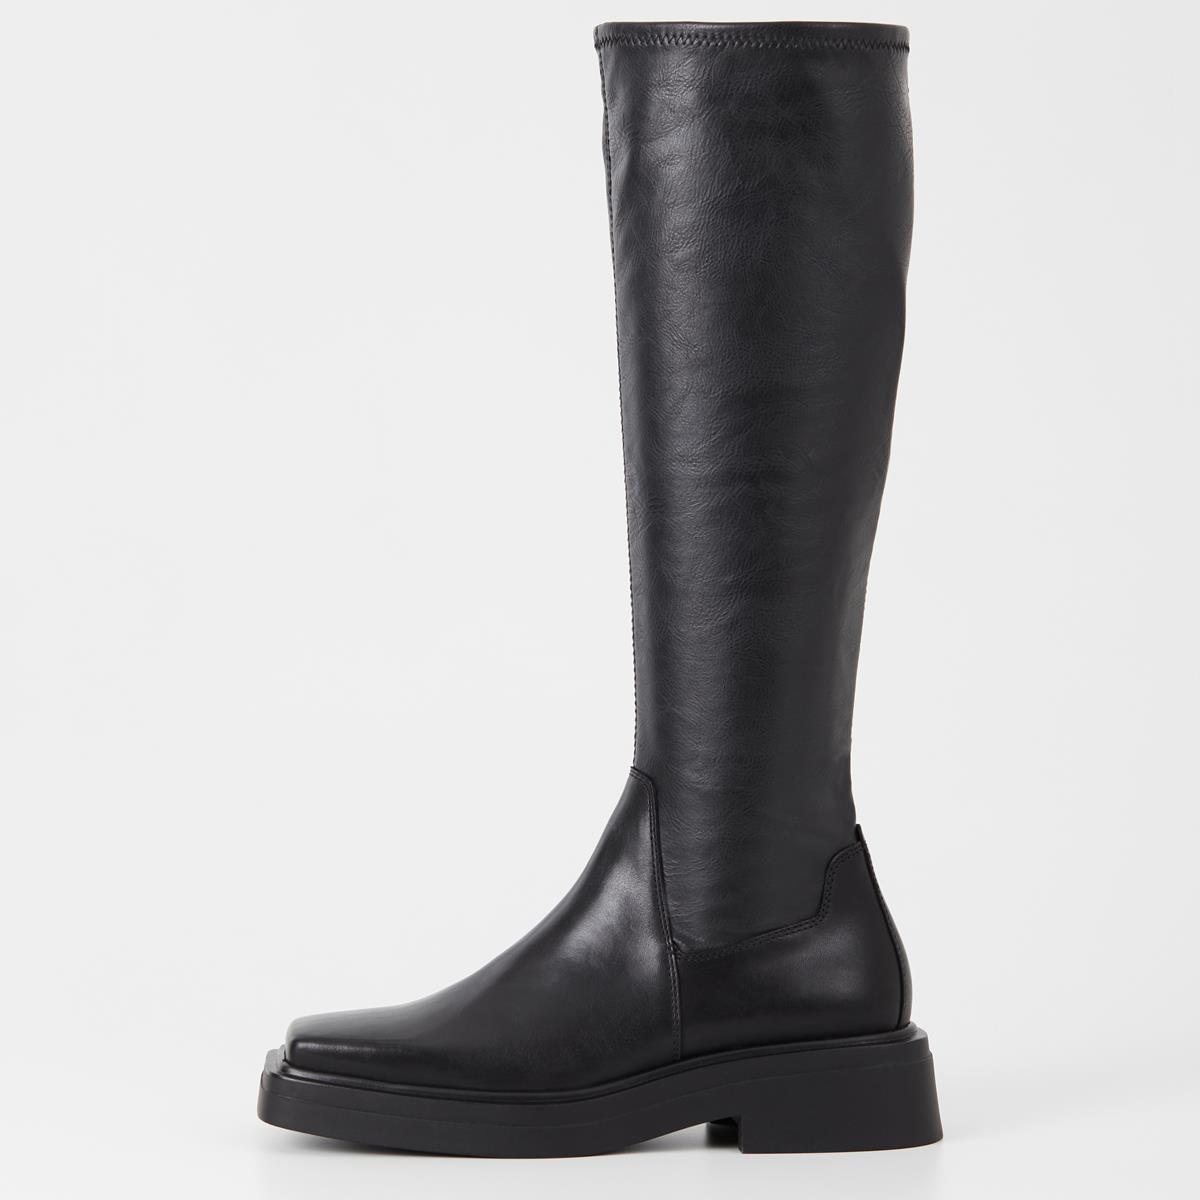 Eyra - Black Tall boots Woman | Vagabond